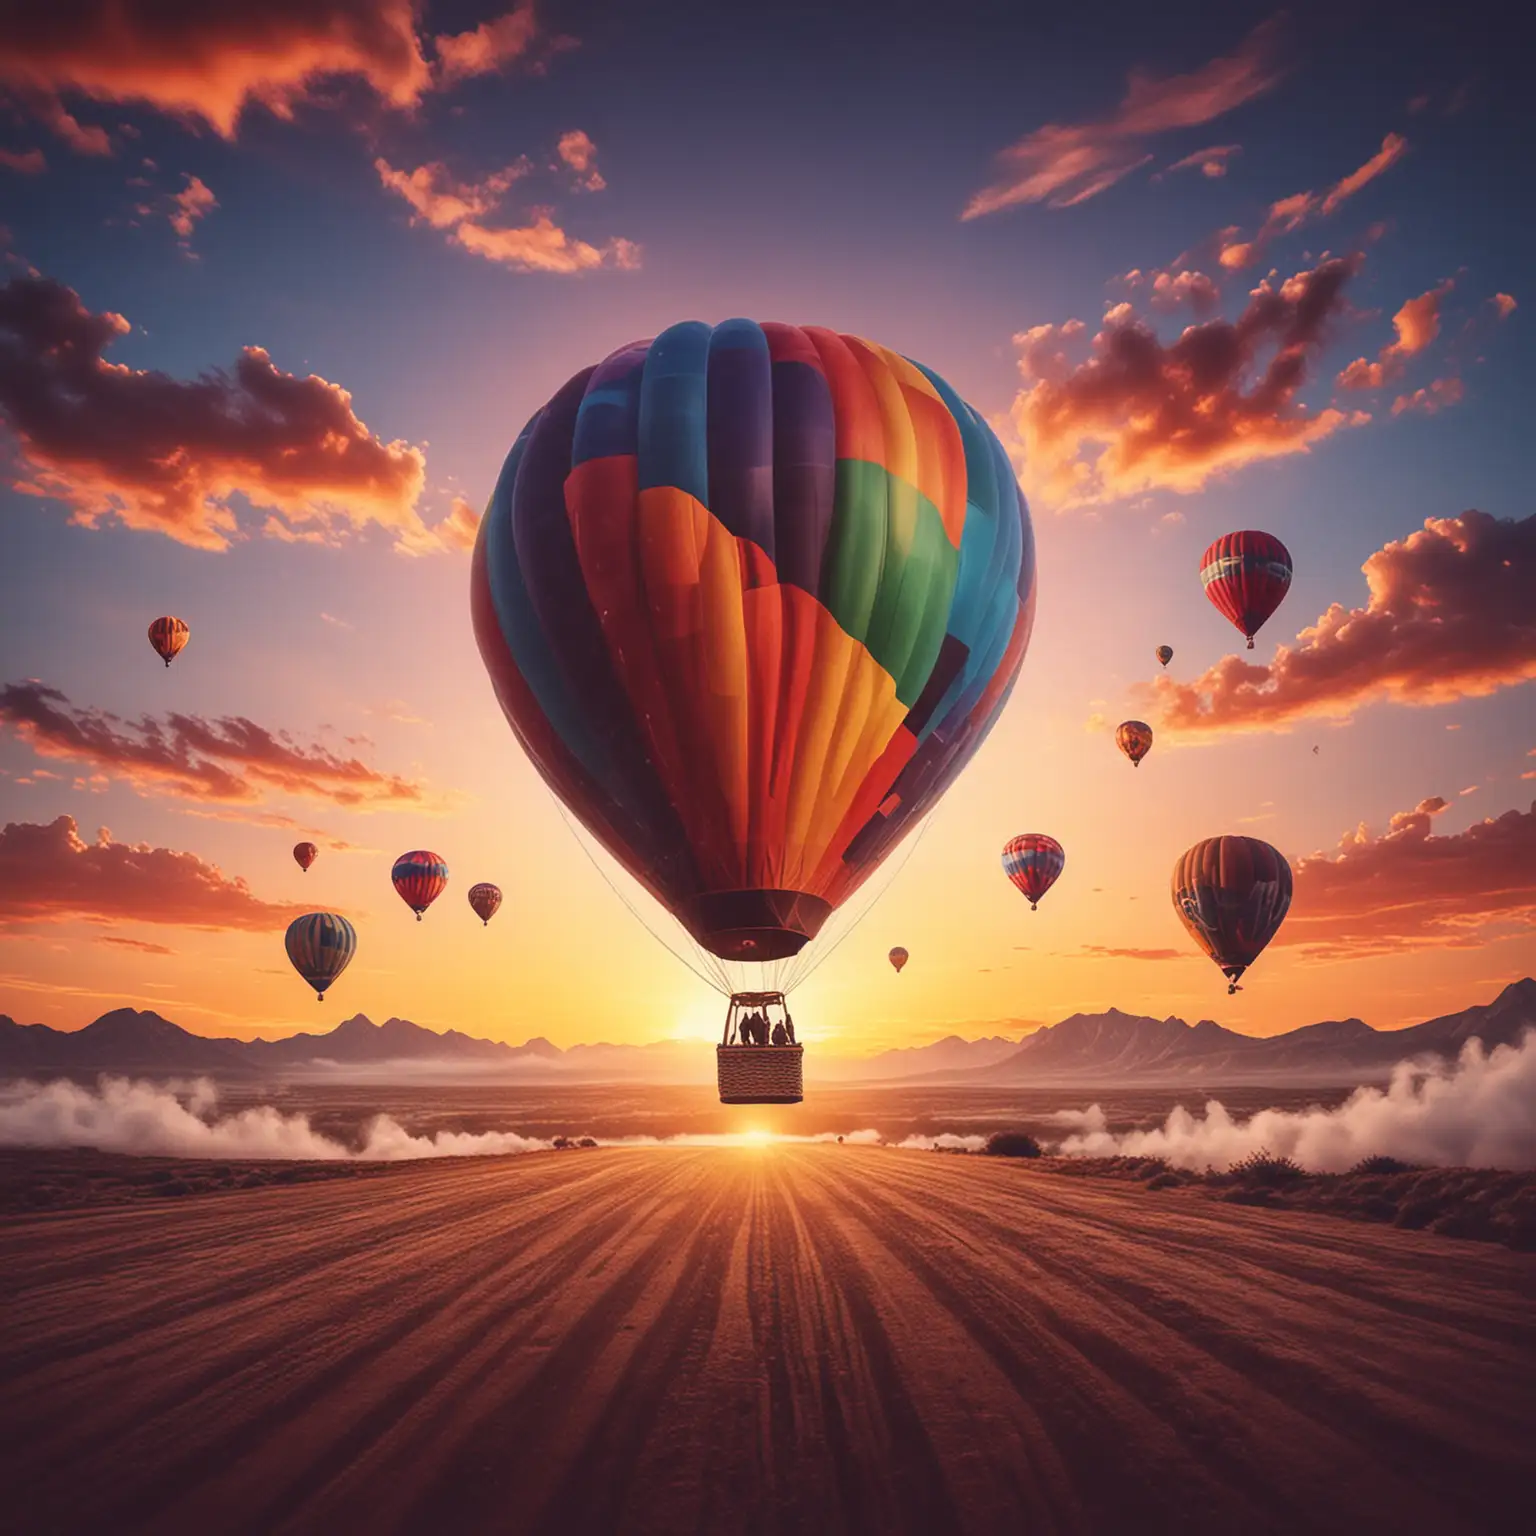 Create colorful image of a balloon race across a sunset sky logo